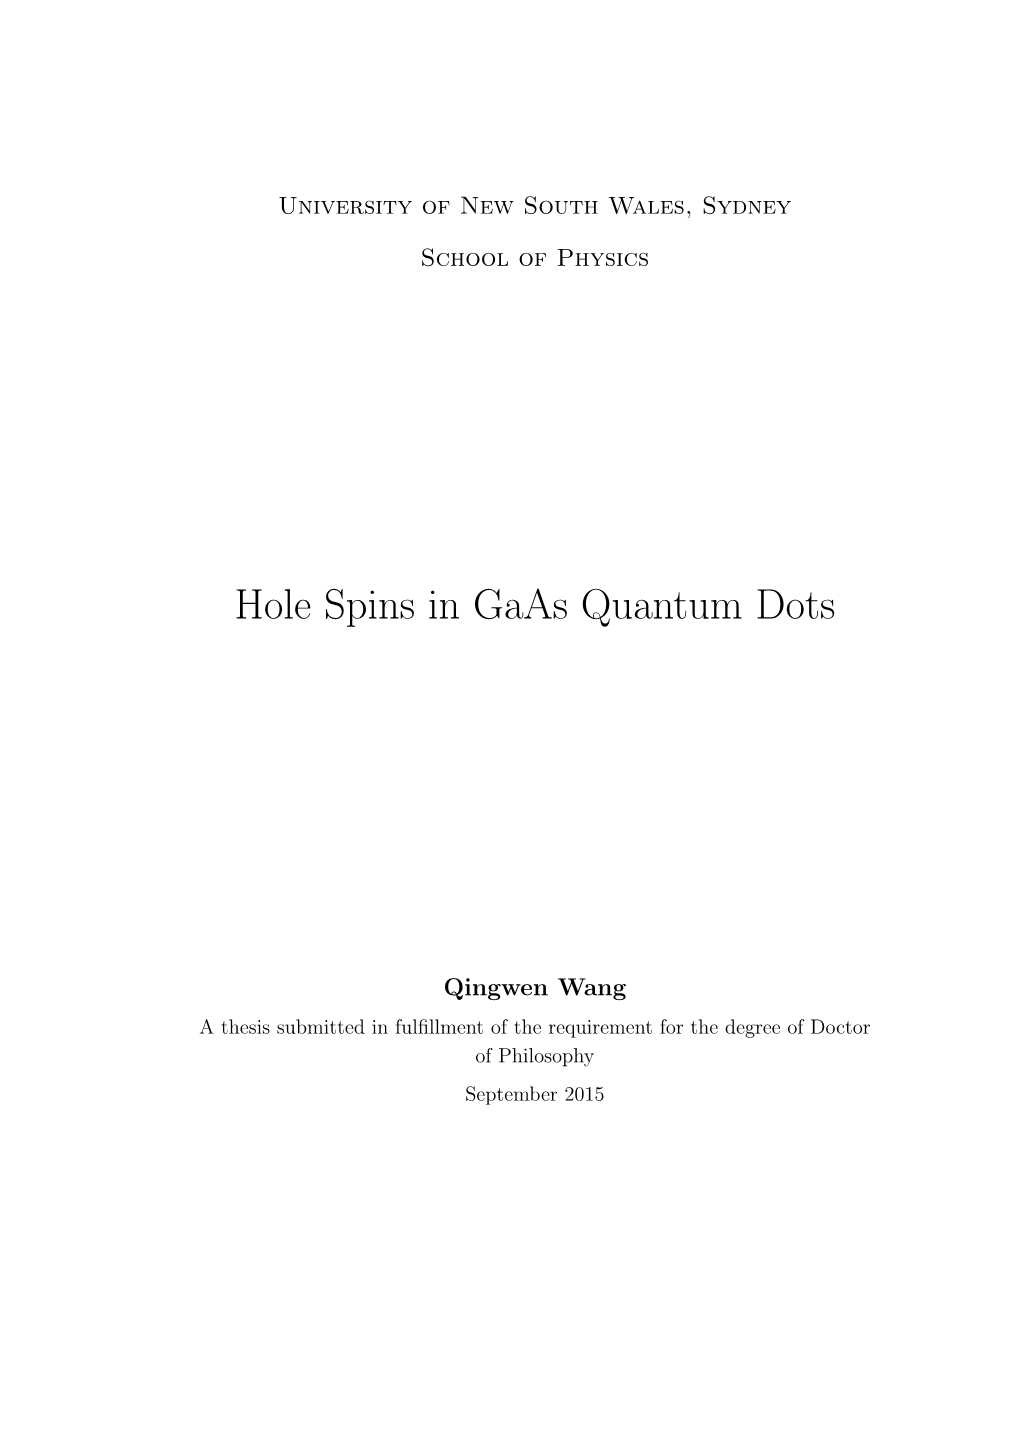 Hole Spins in Gaas Quantum Dots